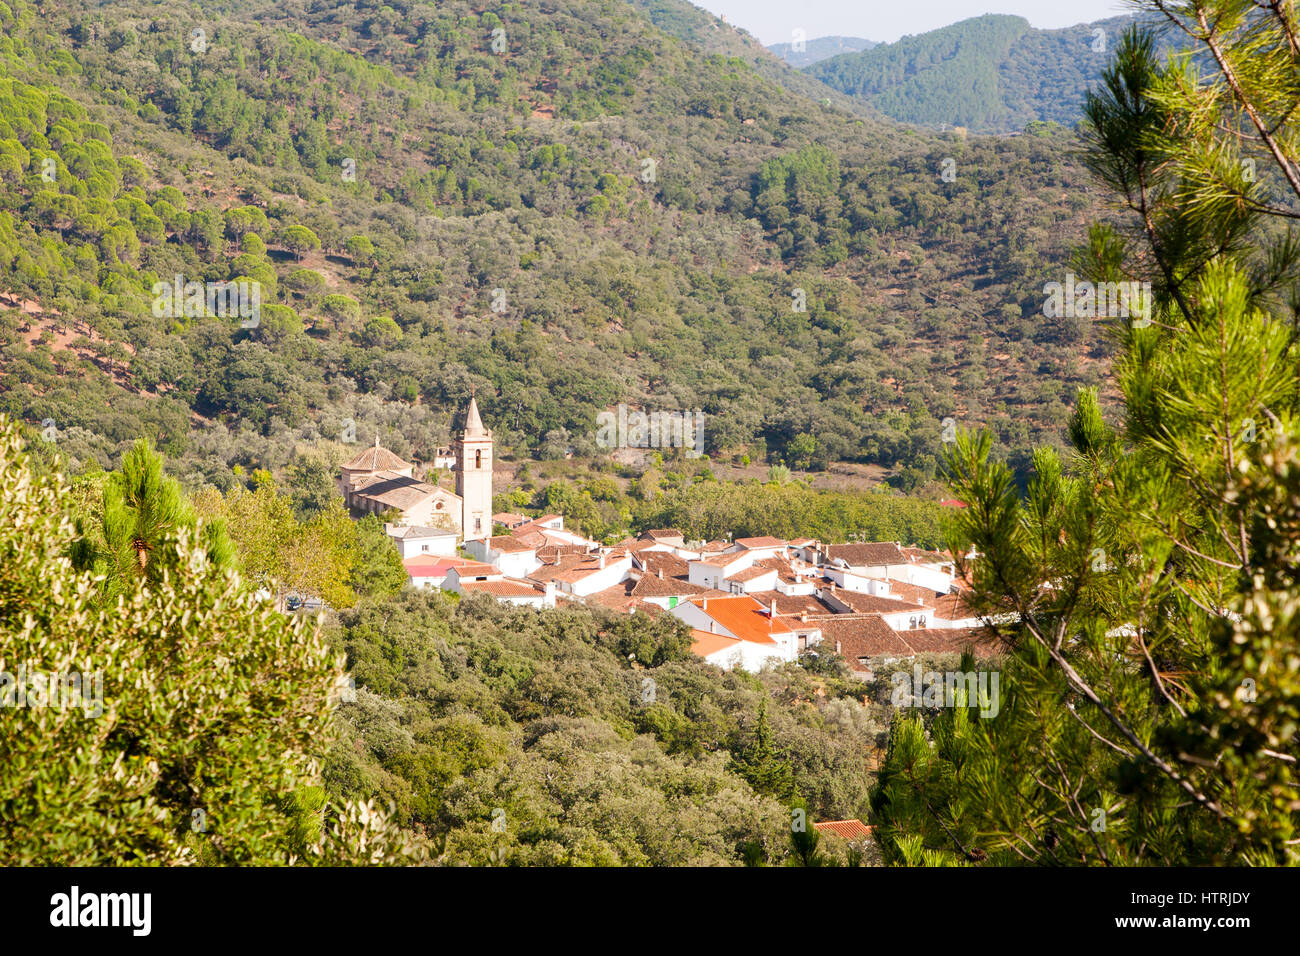 Village of Linares de la Sierra, Sierra de Aracena, Huelva province, Spain Stock Photo